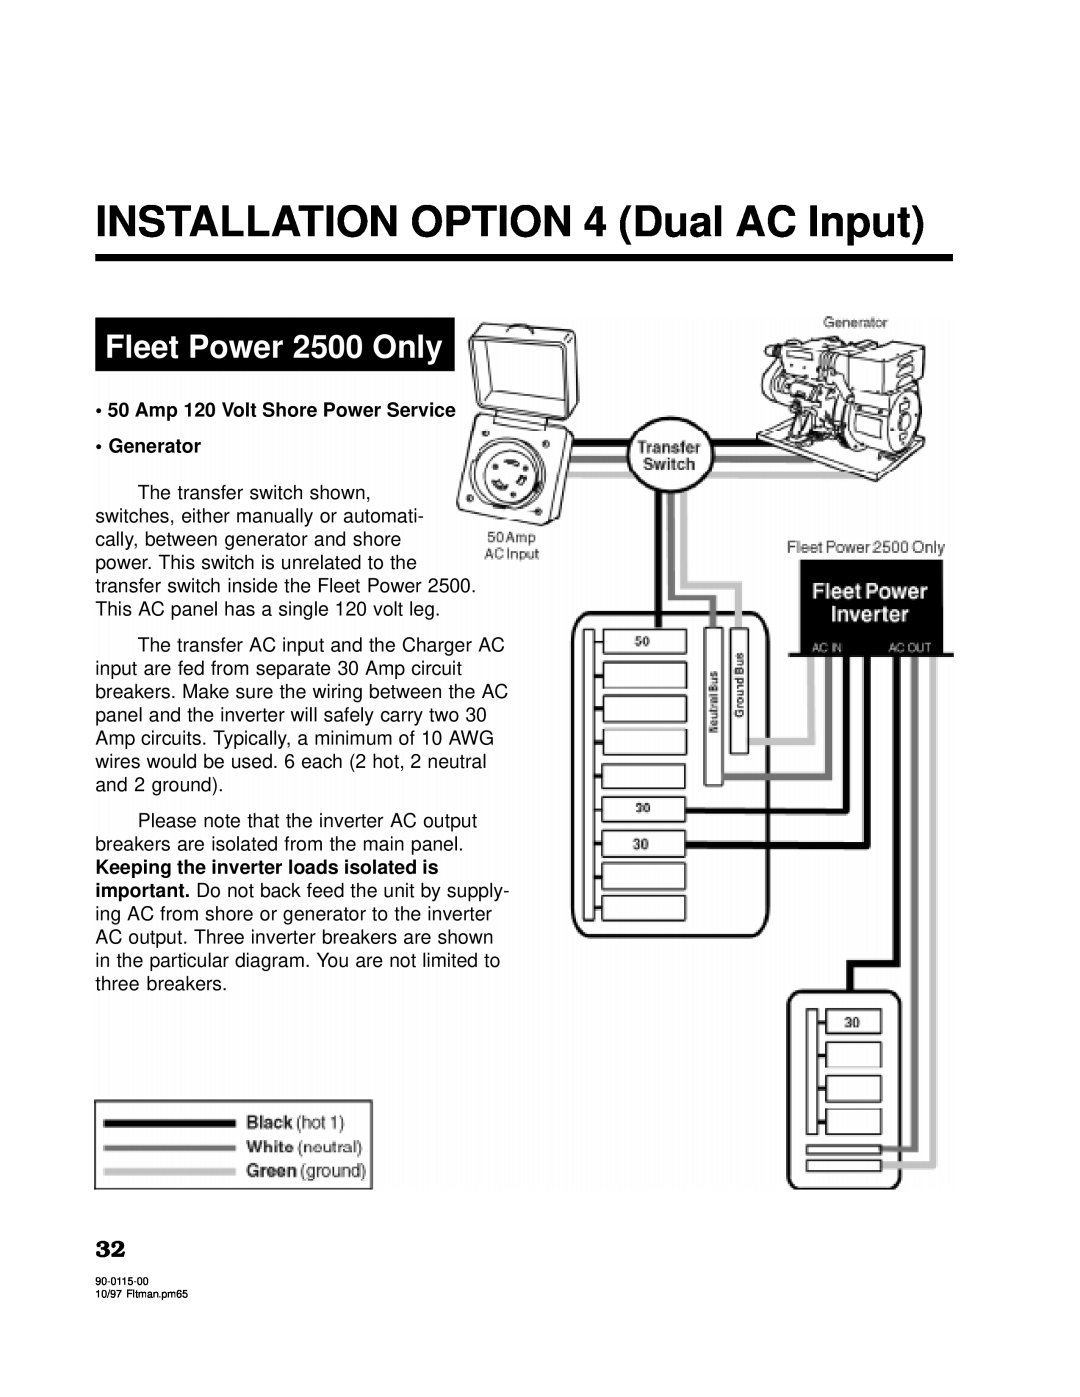 Xantrex Technology 2000 owner manual INSTALLATION OPTION 4 Dual AC Input, Fleet Power 2500 Only 